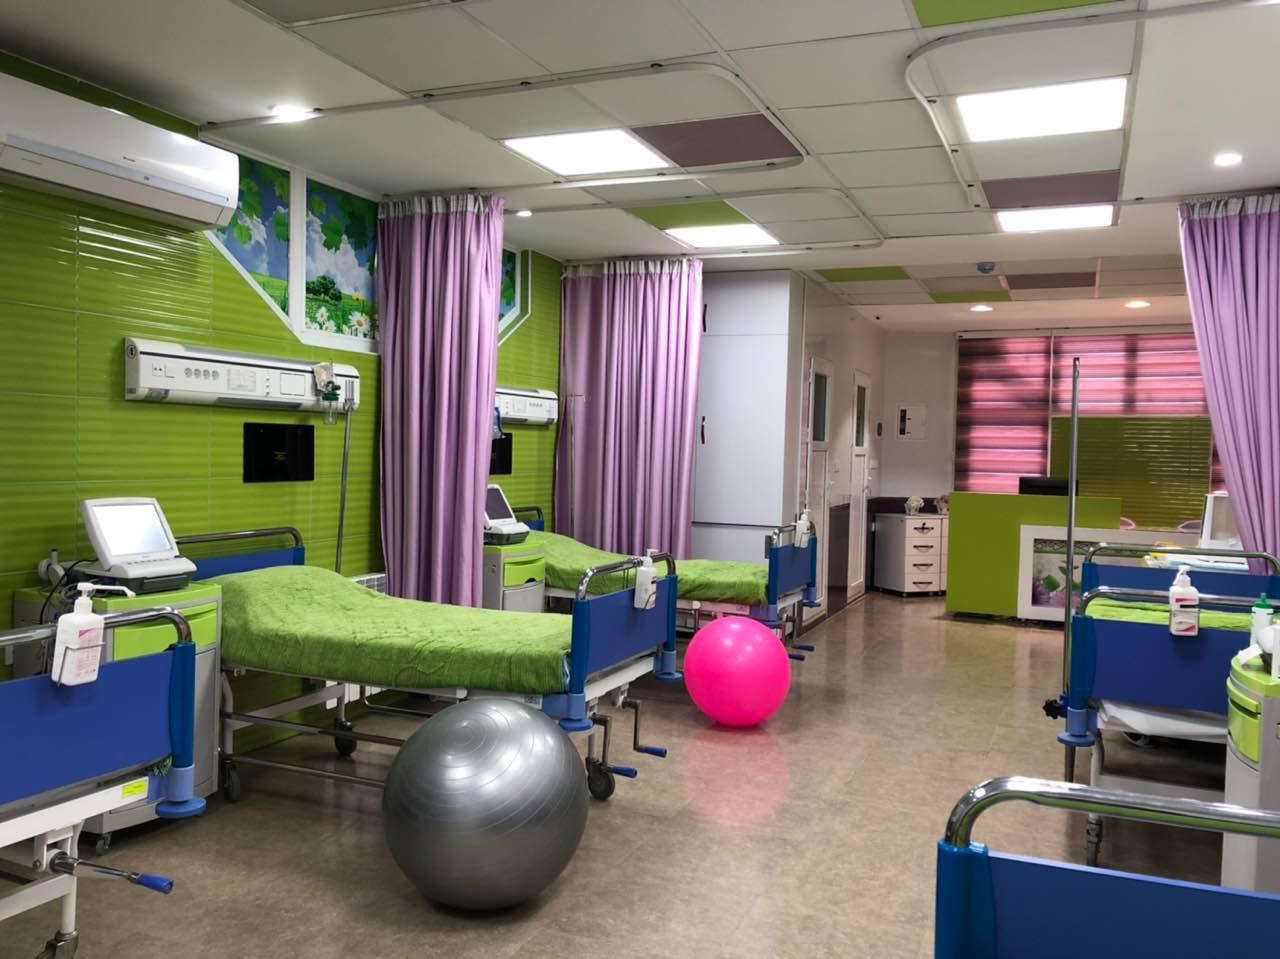 Bint Al-Huda Private Maternity Hospital